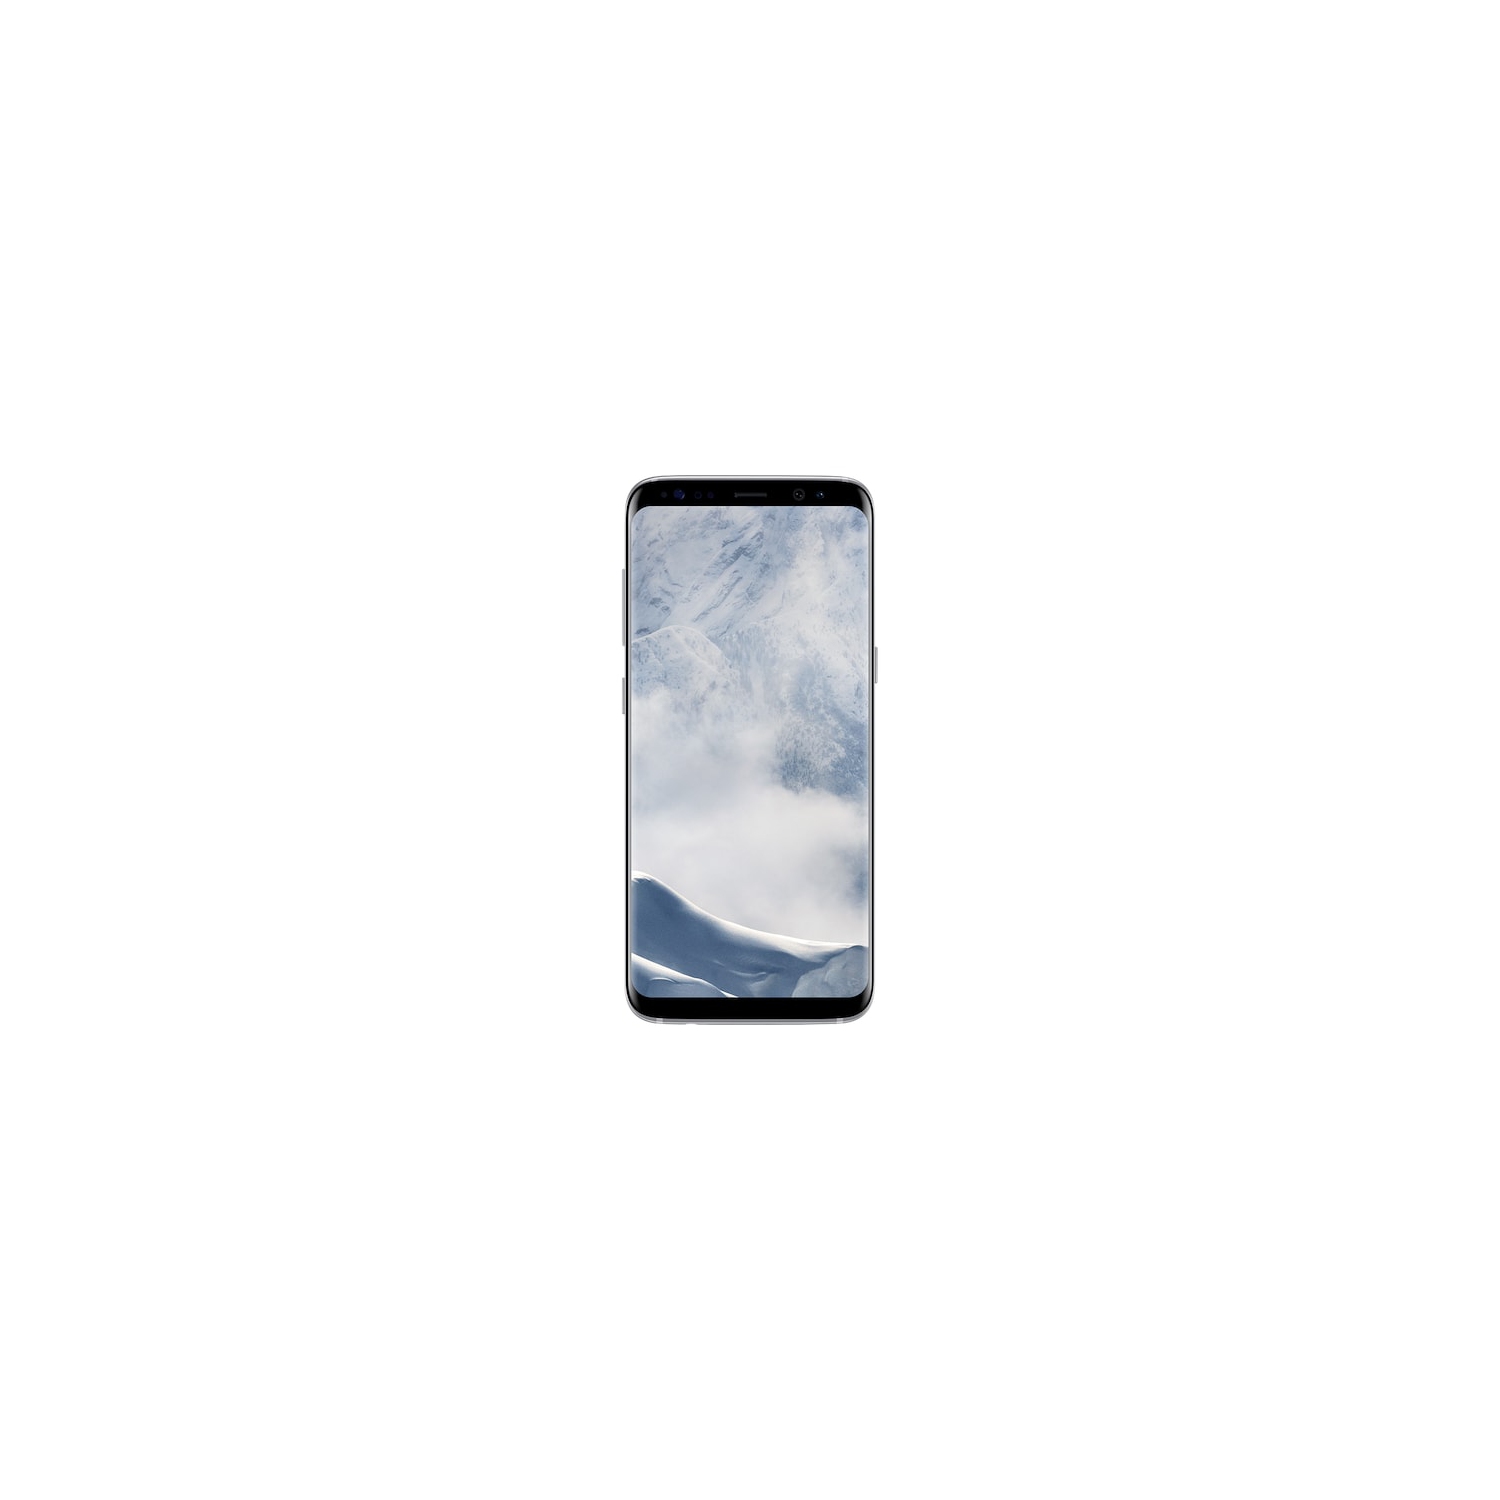 Samsung Galaxy S8 64GB Smartphone - Arctic Silver - Unlocked - Open Box